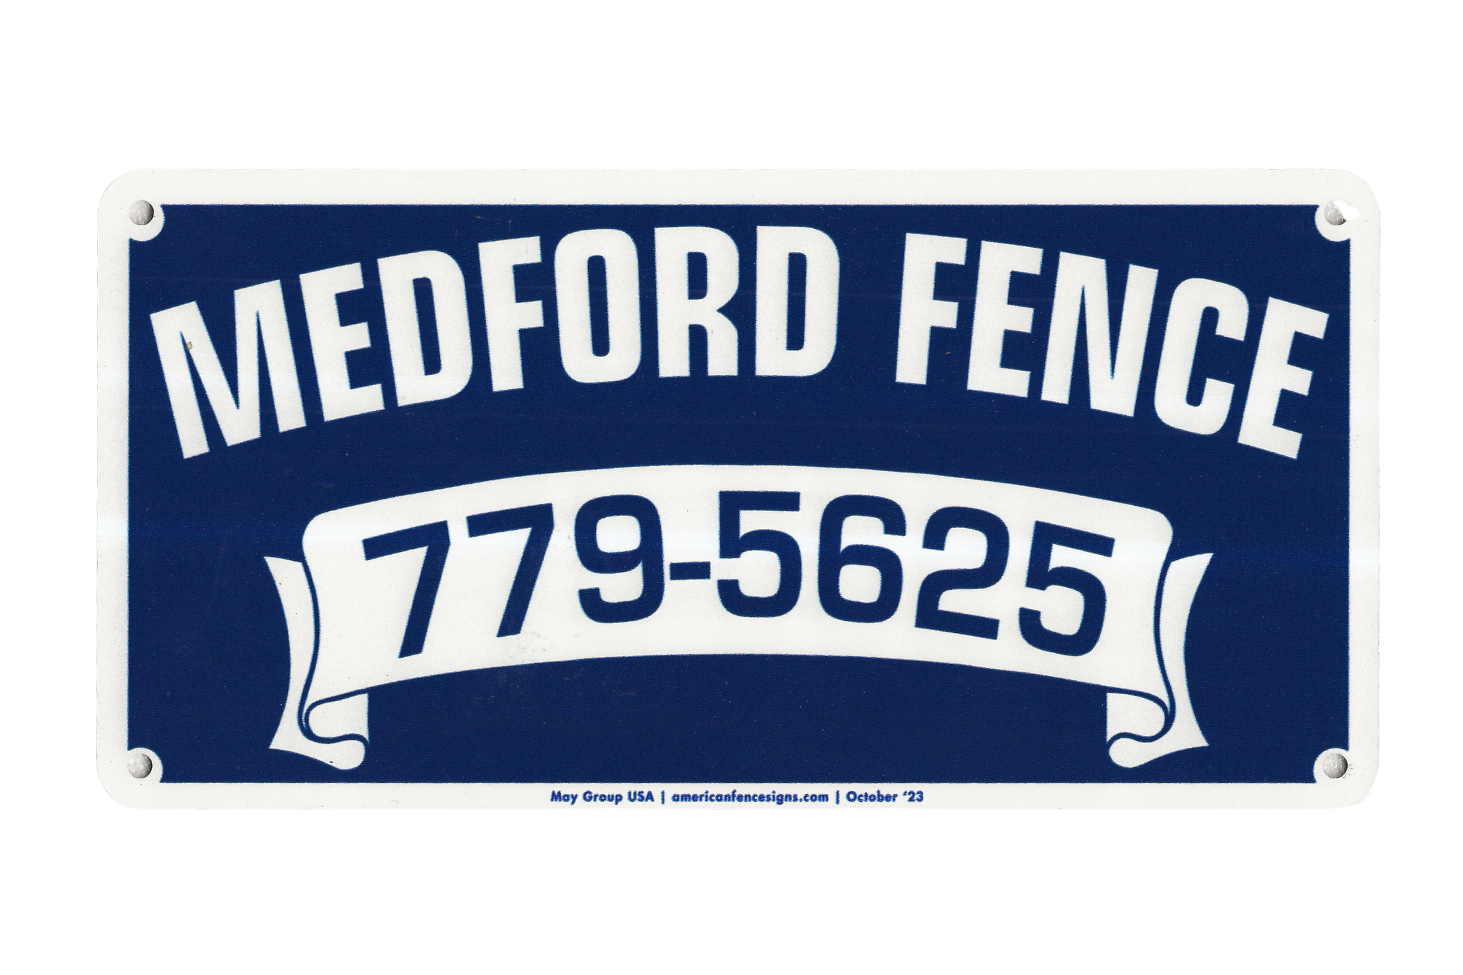 Medford Fence Company, LLC